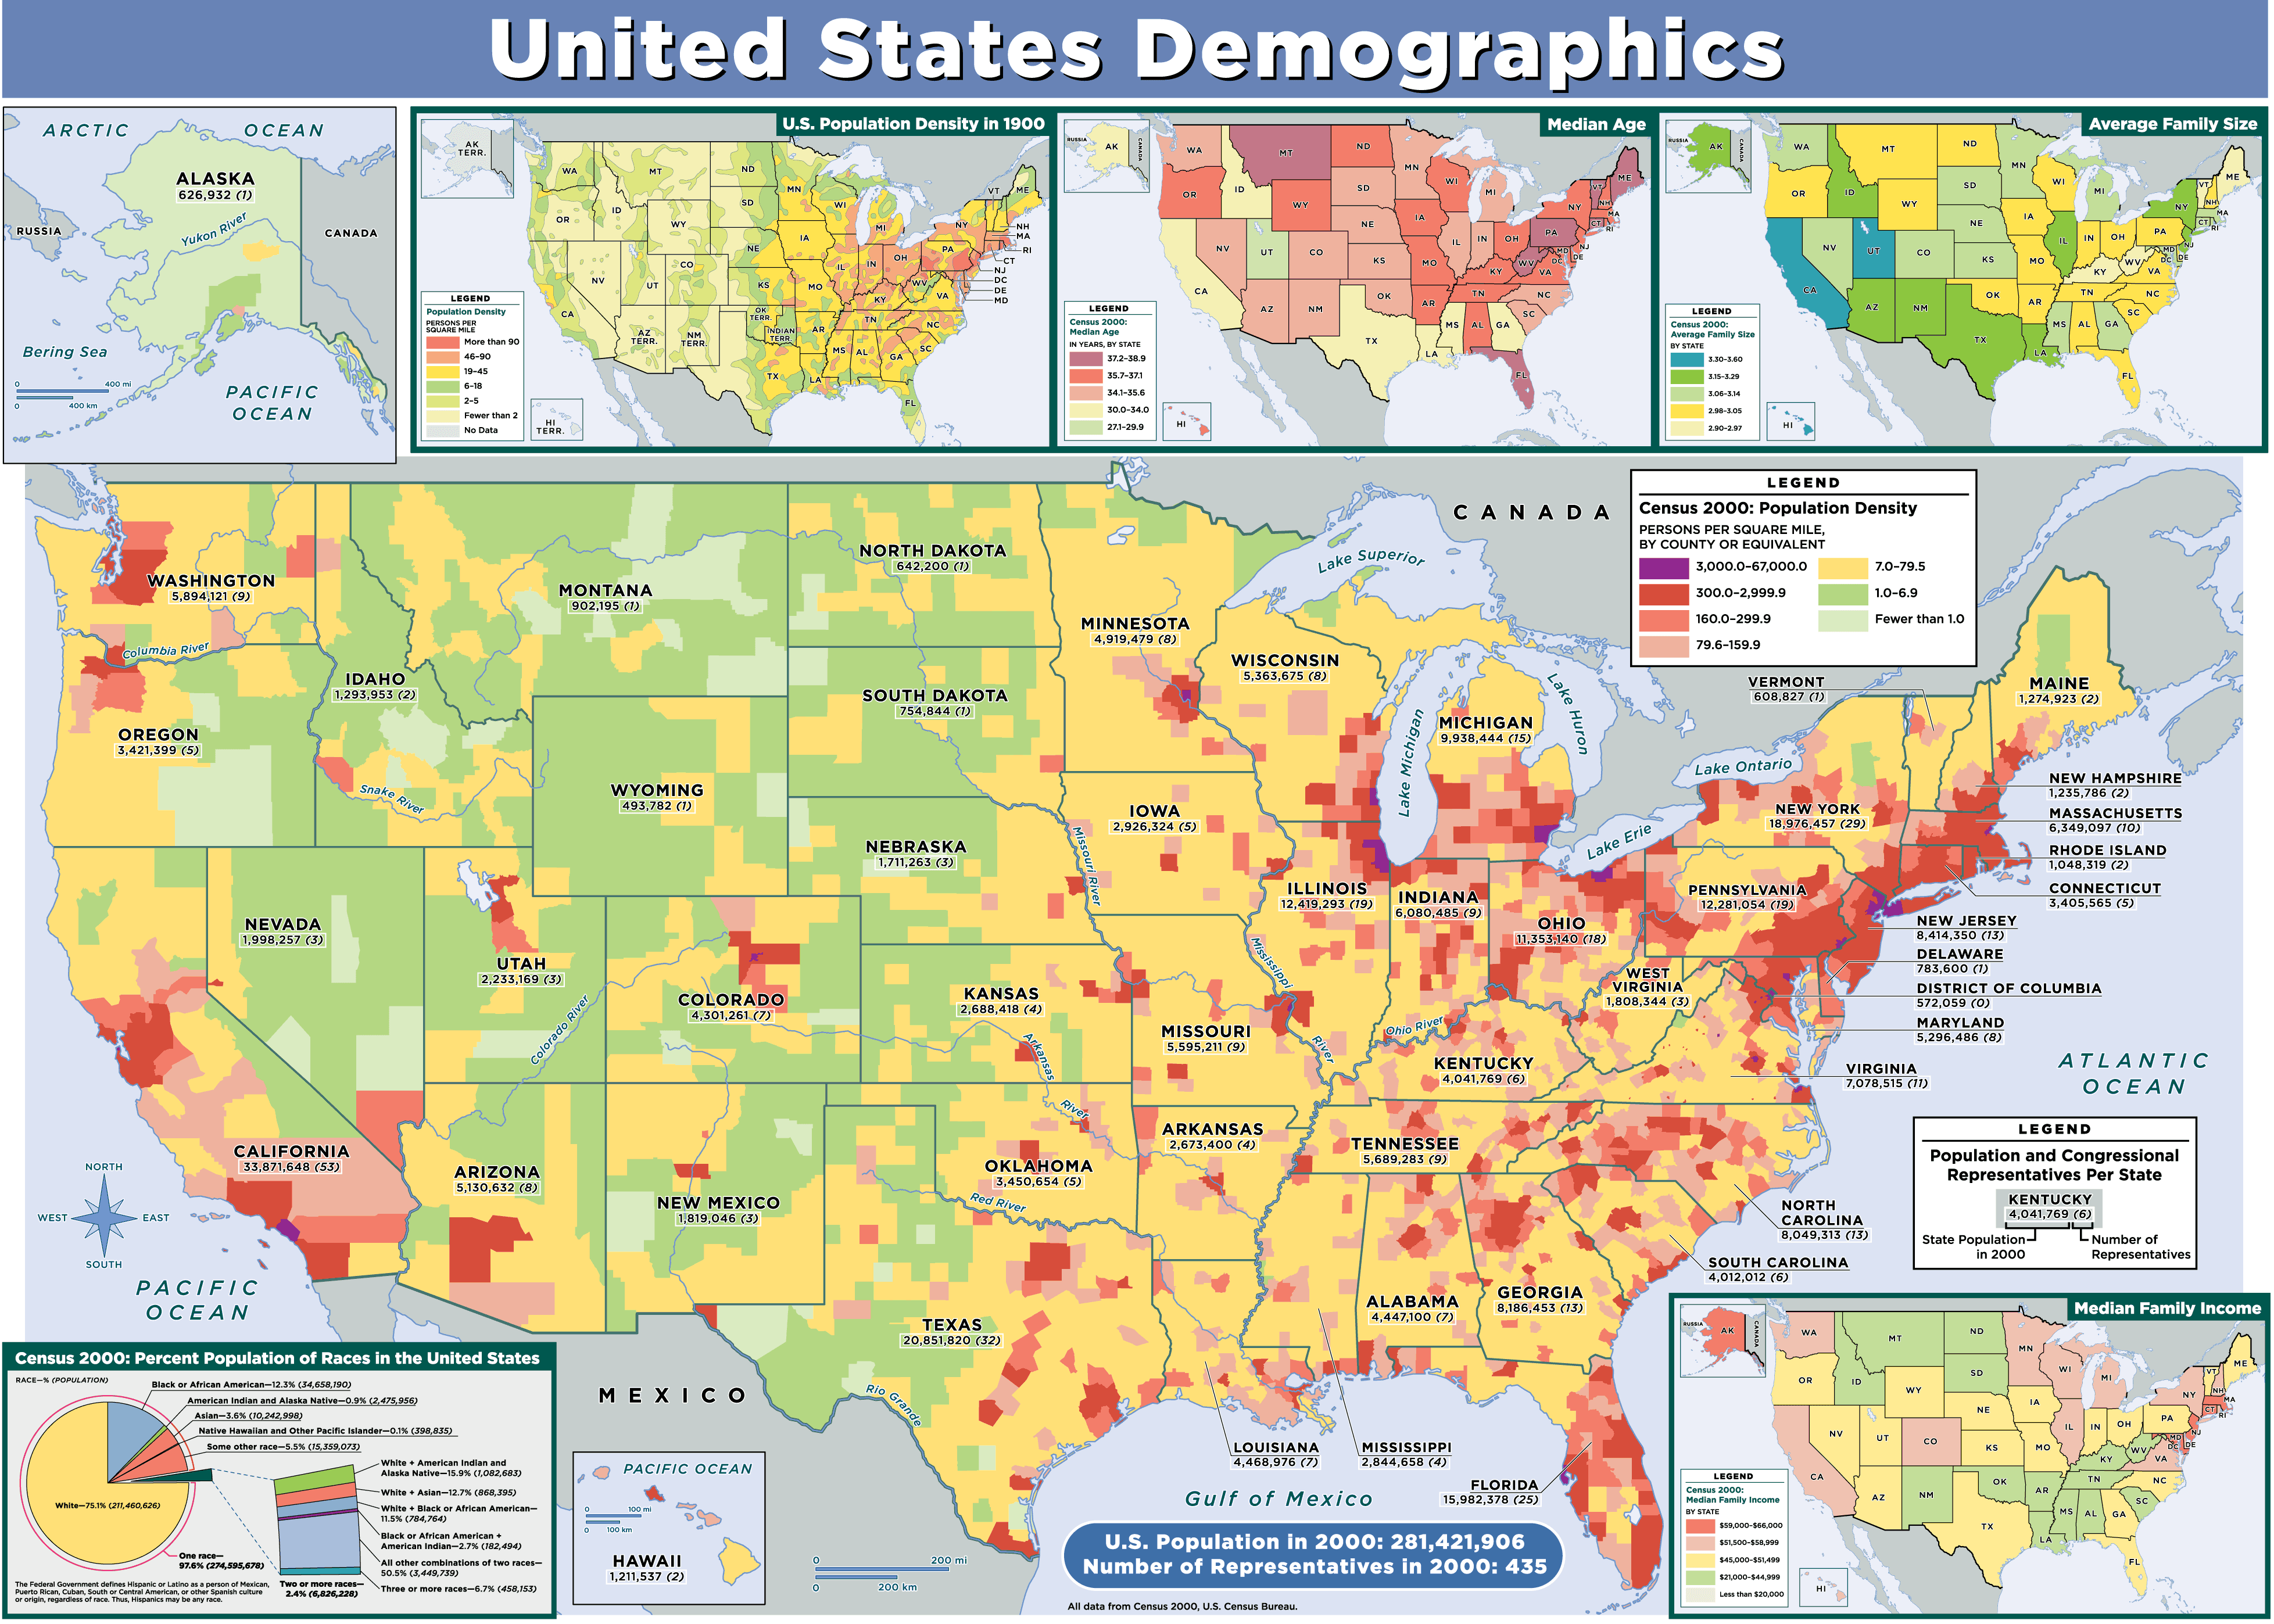 United States Demographics Map 2000